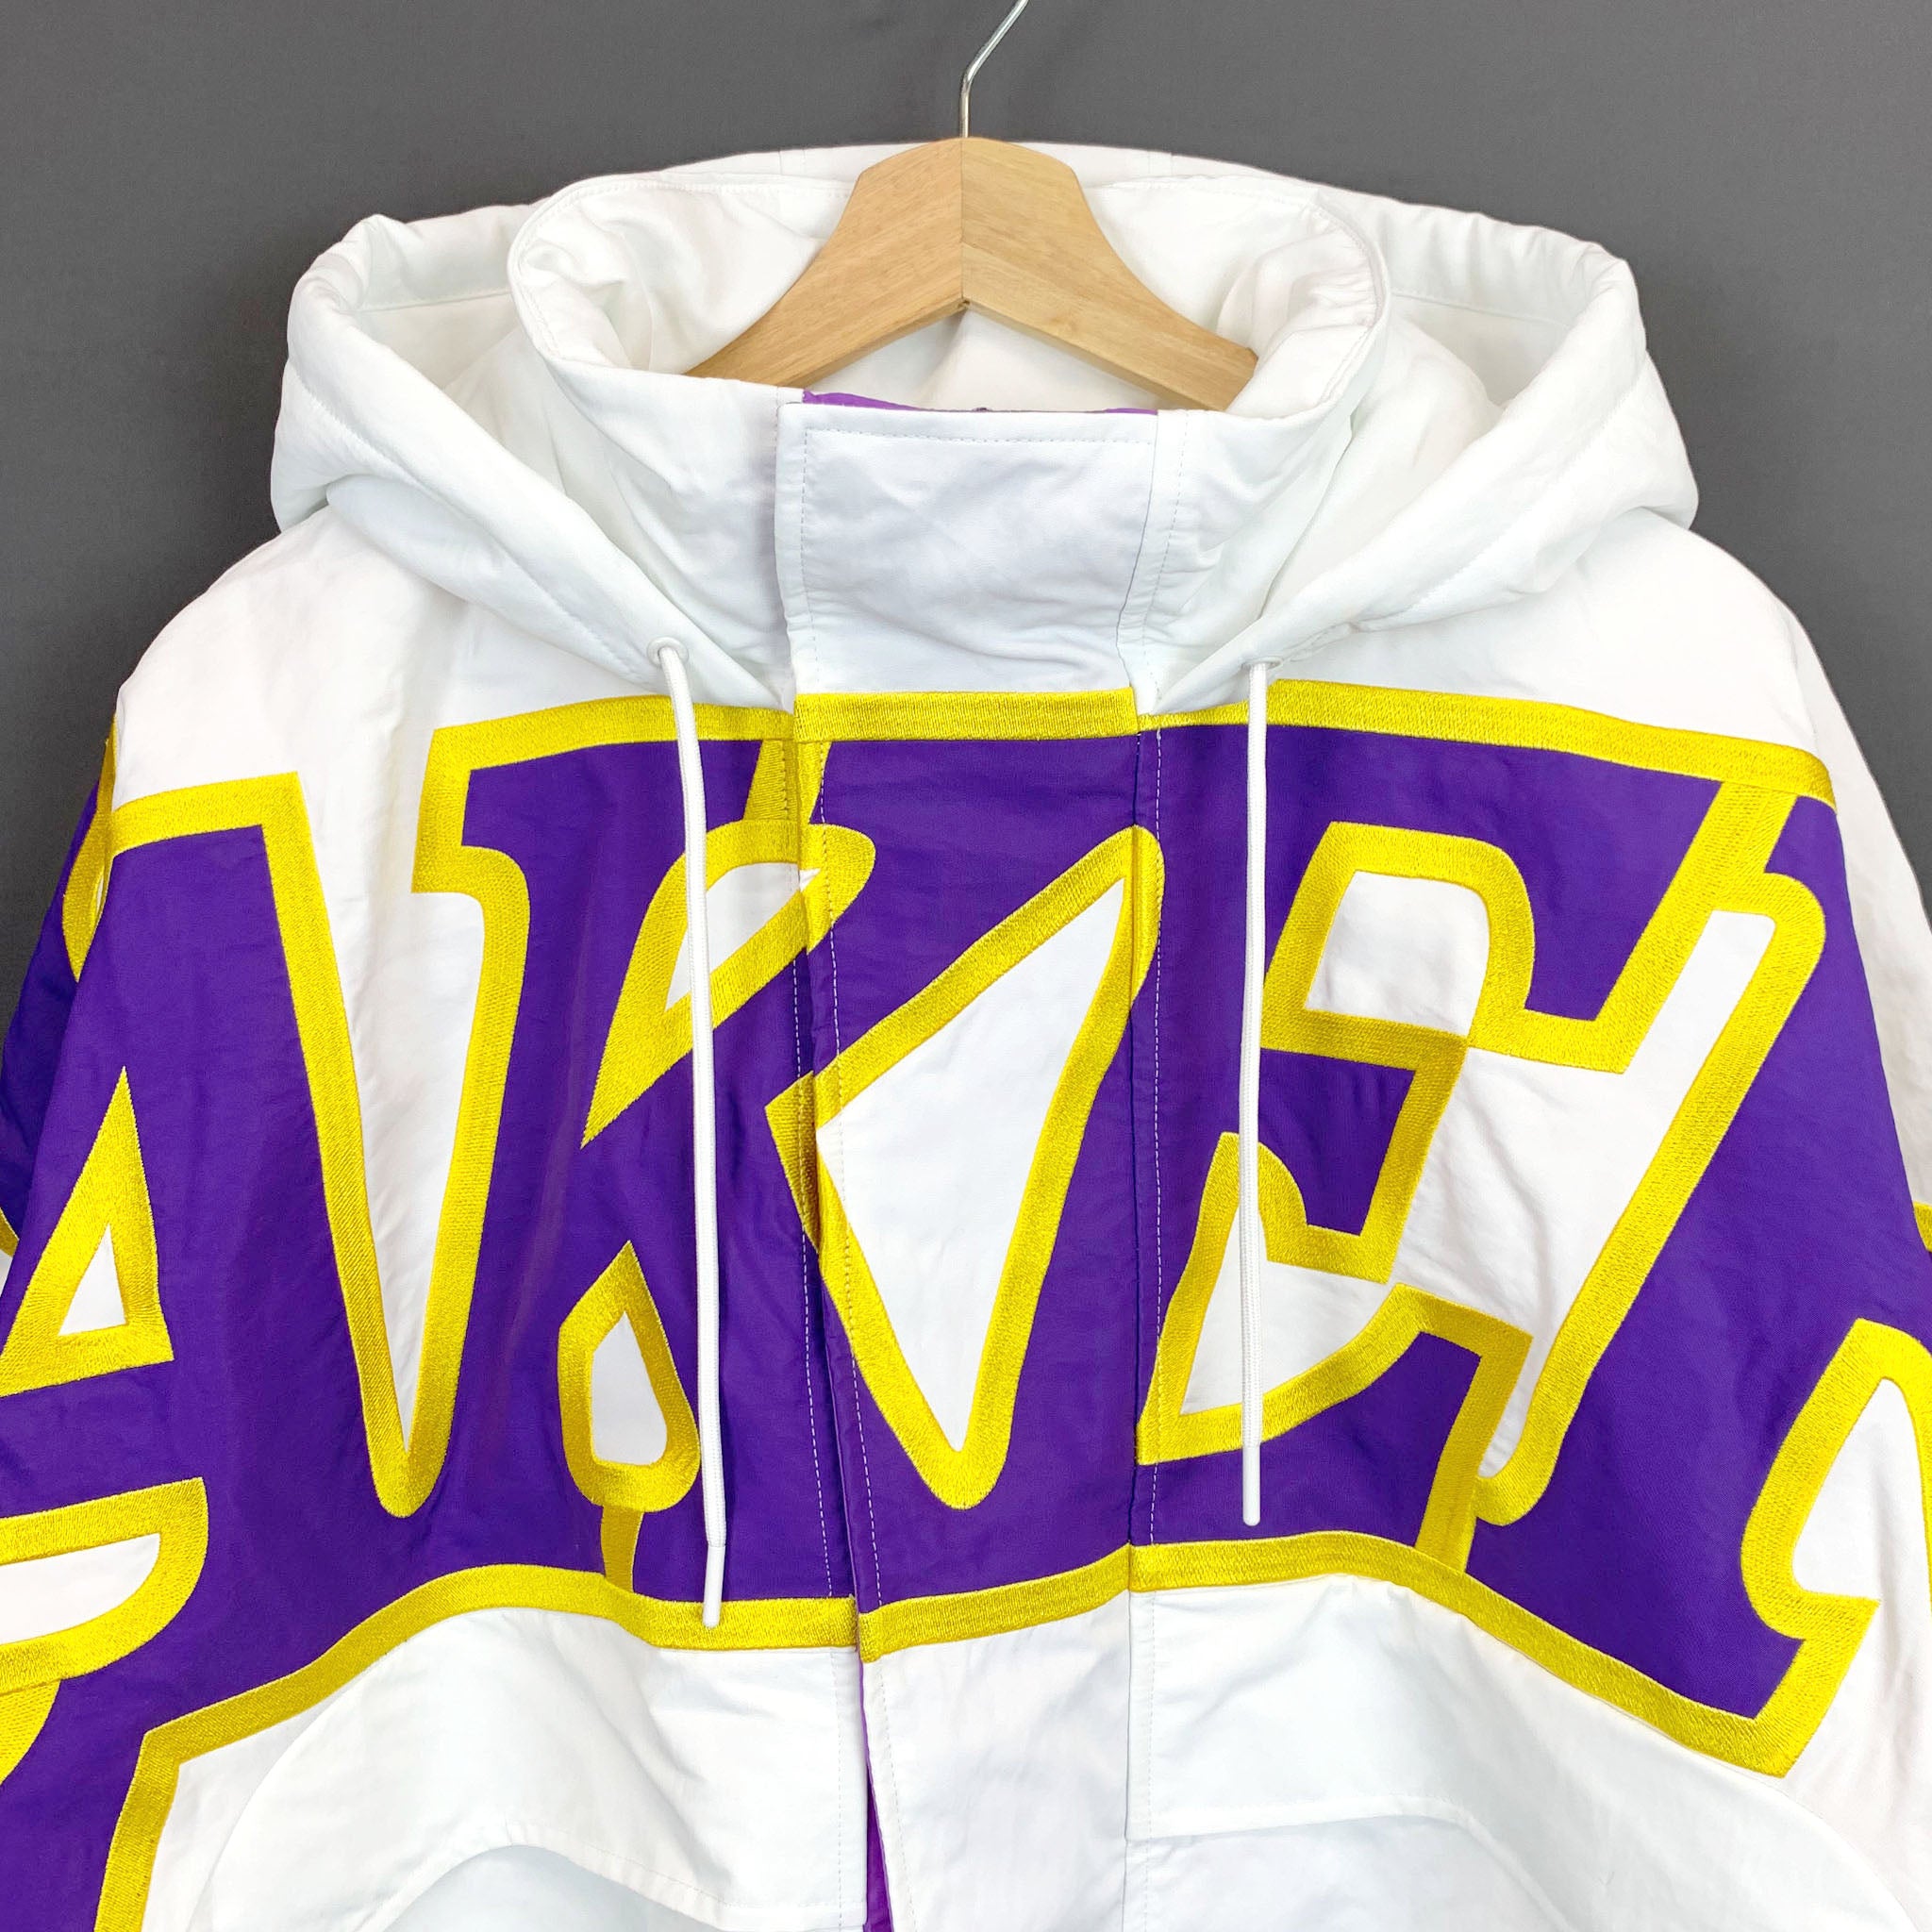 Nike x AMBUSH NBA Lakers Jacket, Men's Fashion, Coats, Jackets and